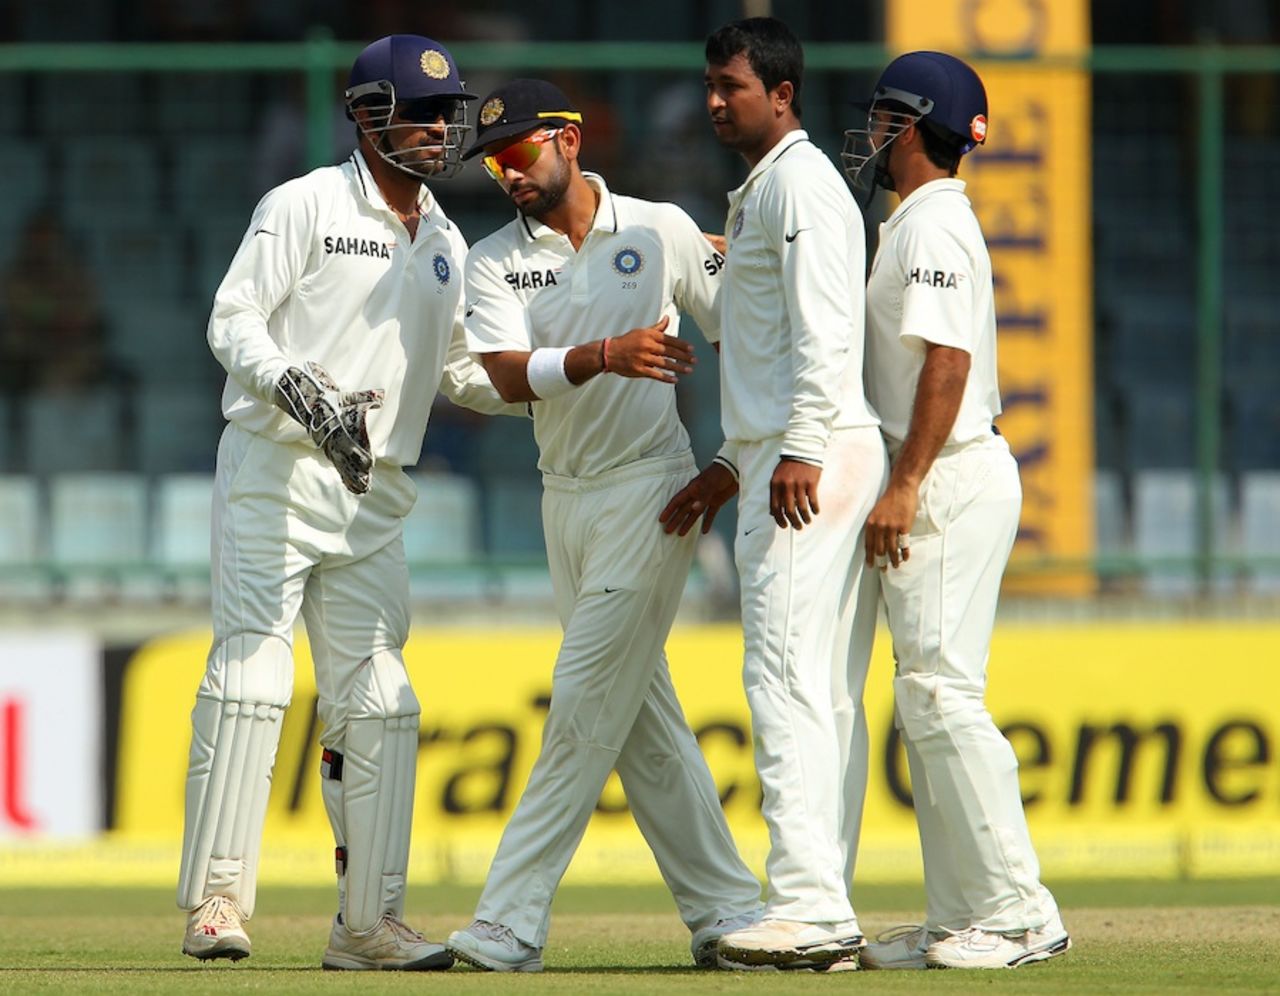 Pragyan Ojha took his 100th Test wicket when he dismissed James Pattinson, India v Australia, 4th Test, Delhi, 2nd day, March 23, 2012